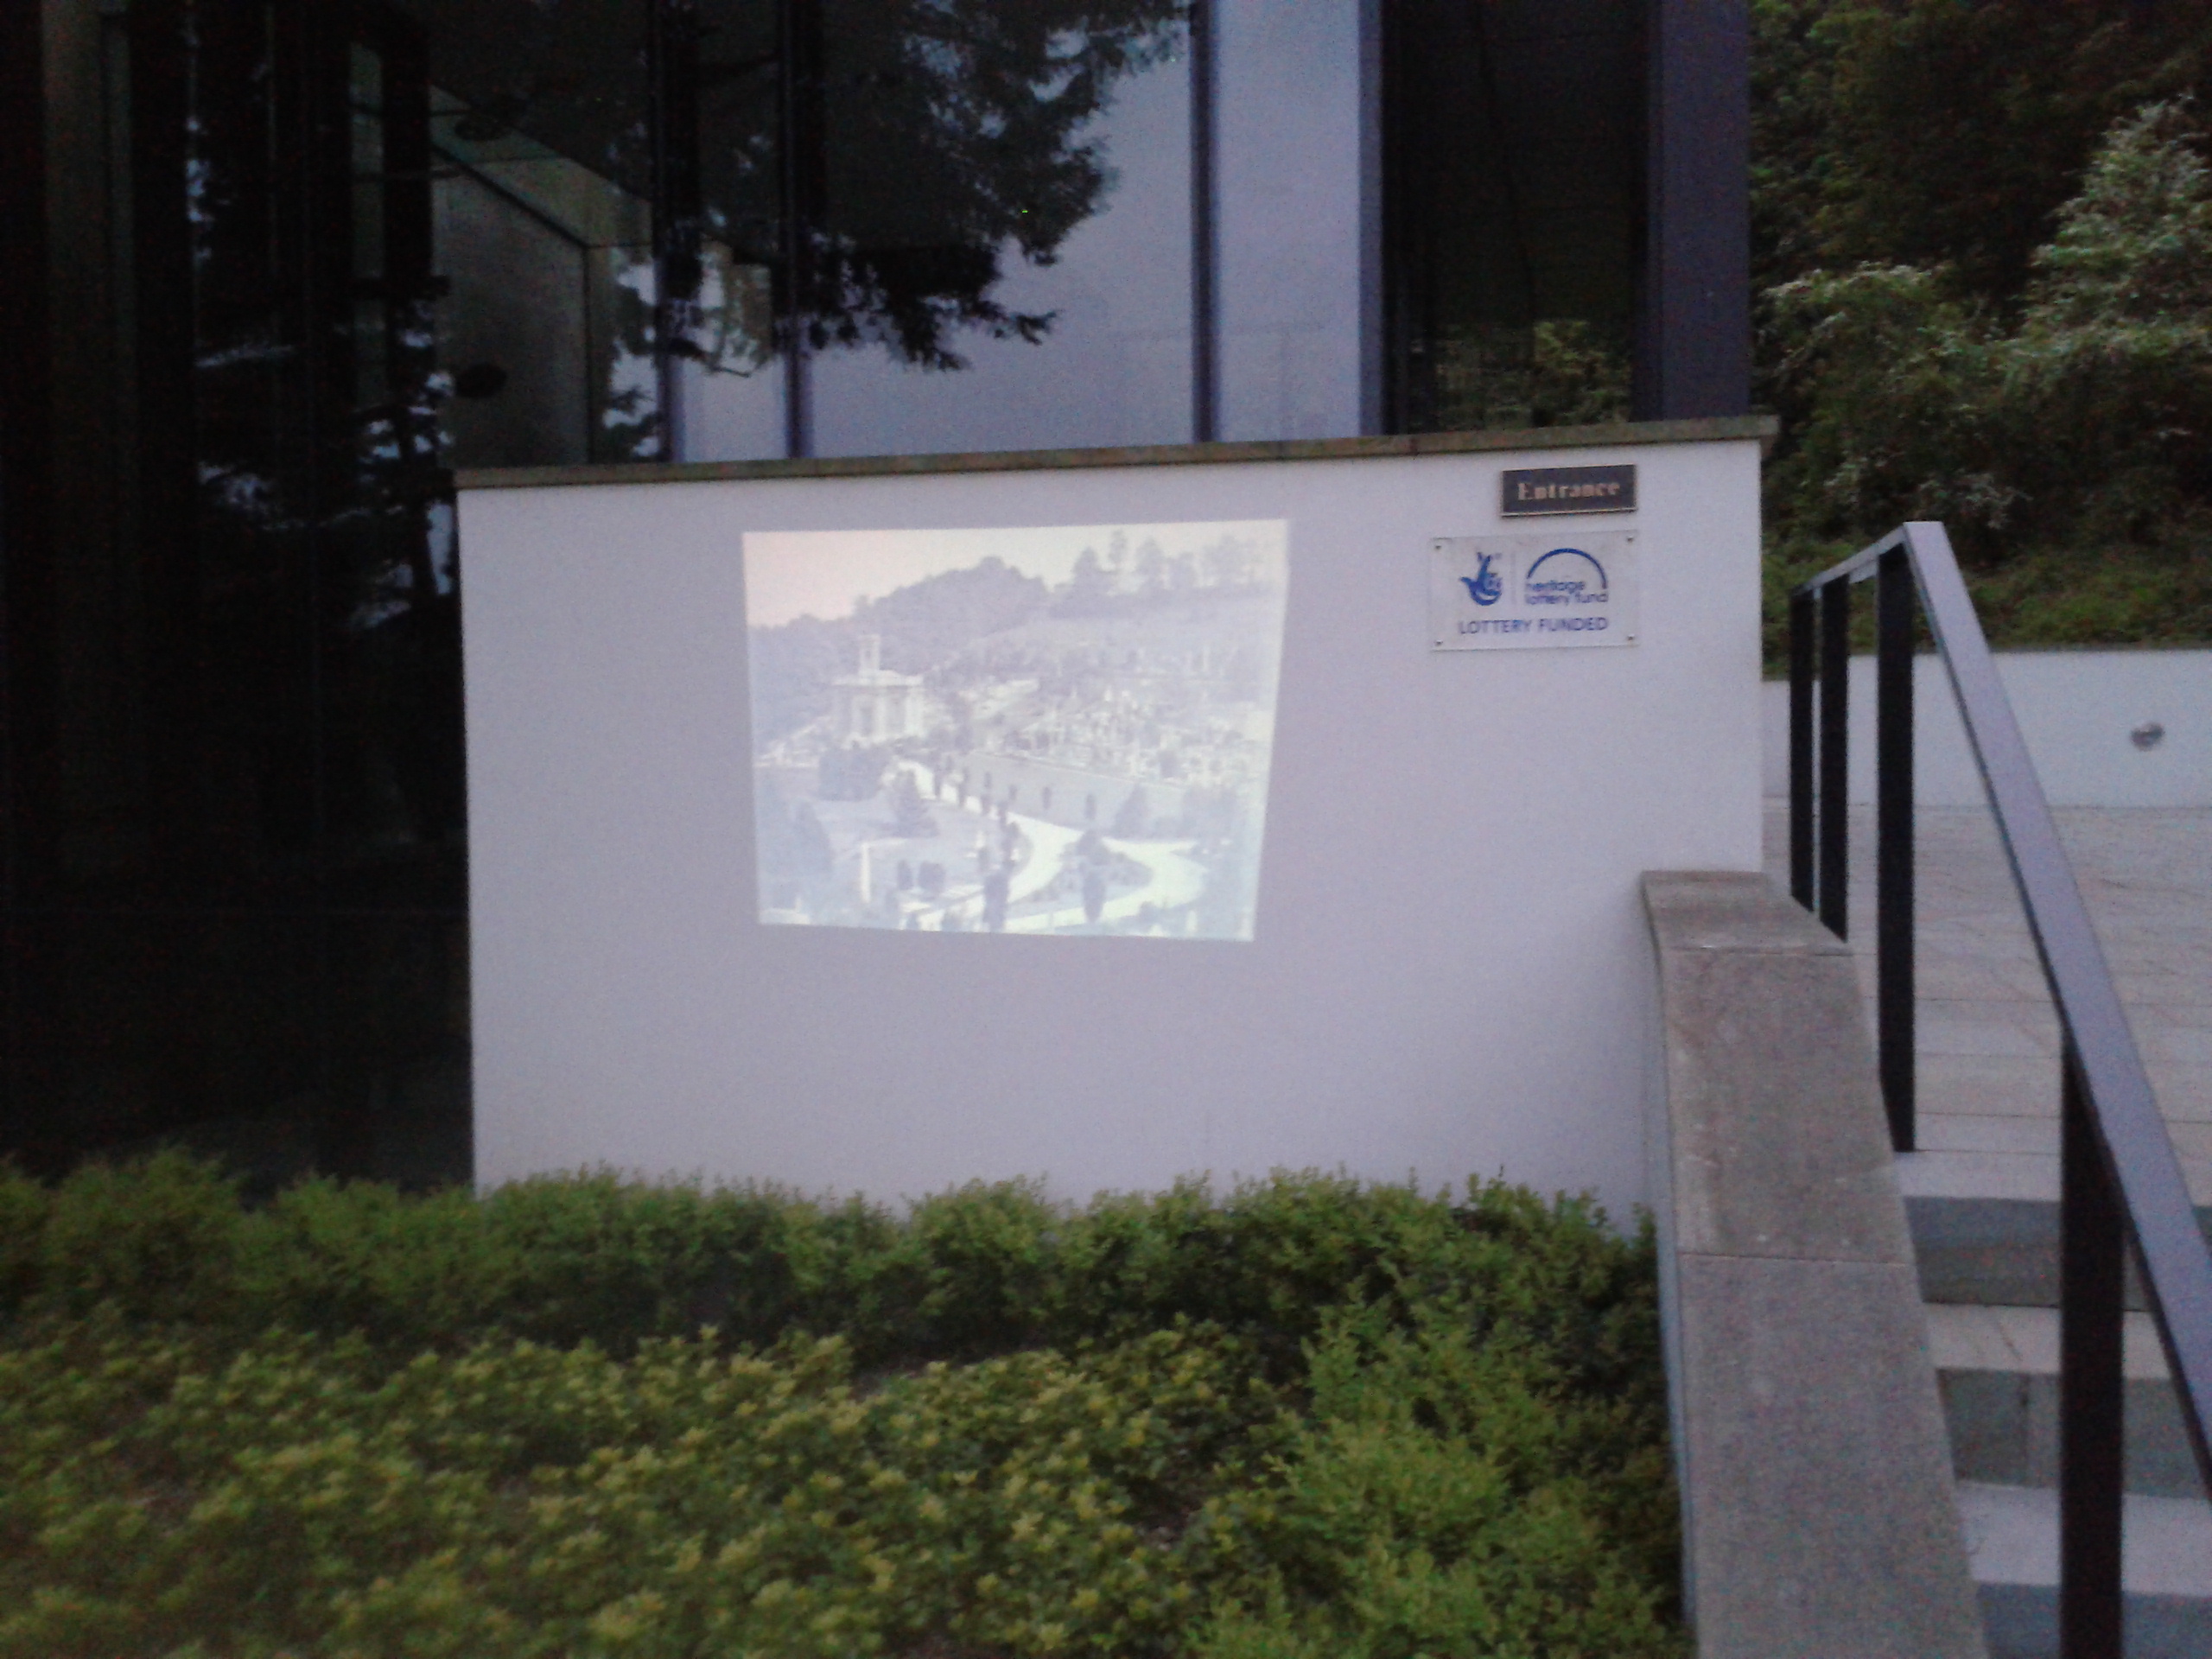 Projector linked to tablet shows historic landscape of Arnos Vale.